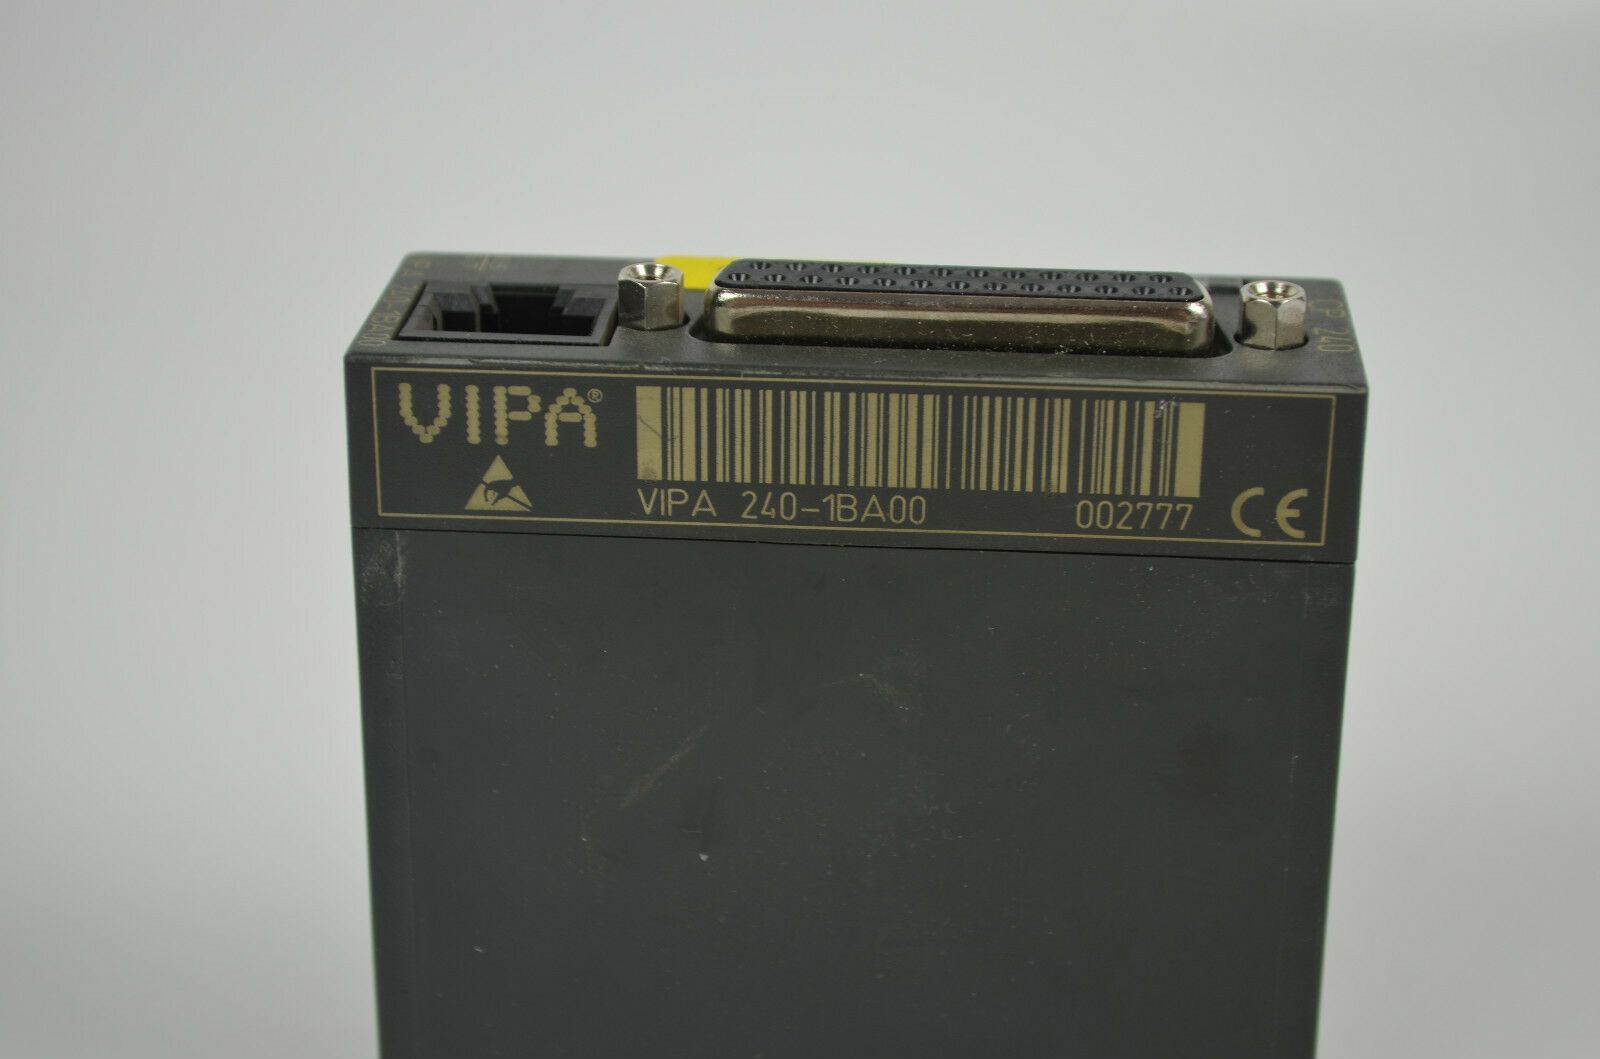 Vipa CP 240 240-1BA00 / E4 